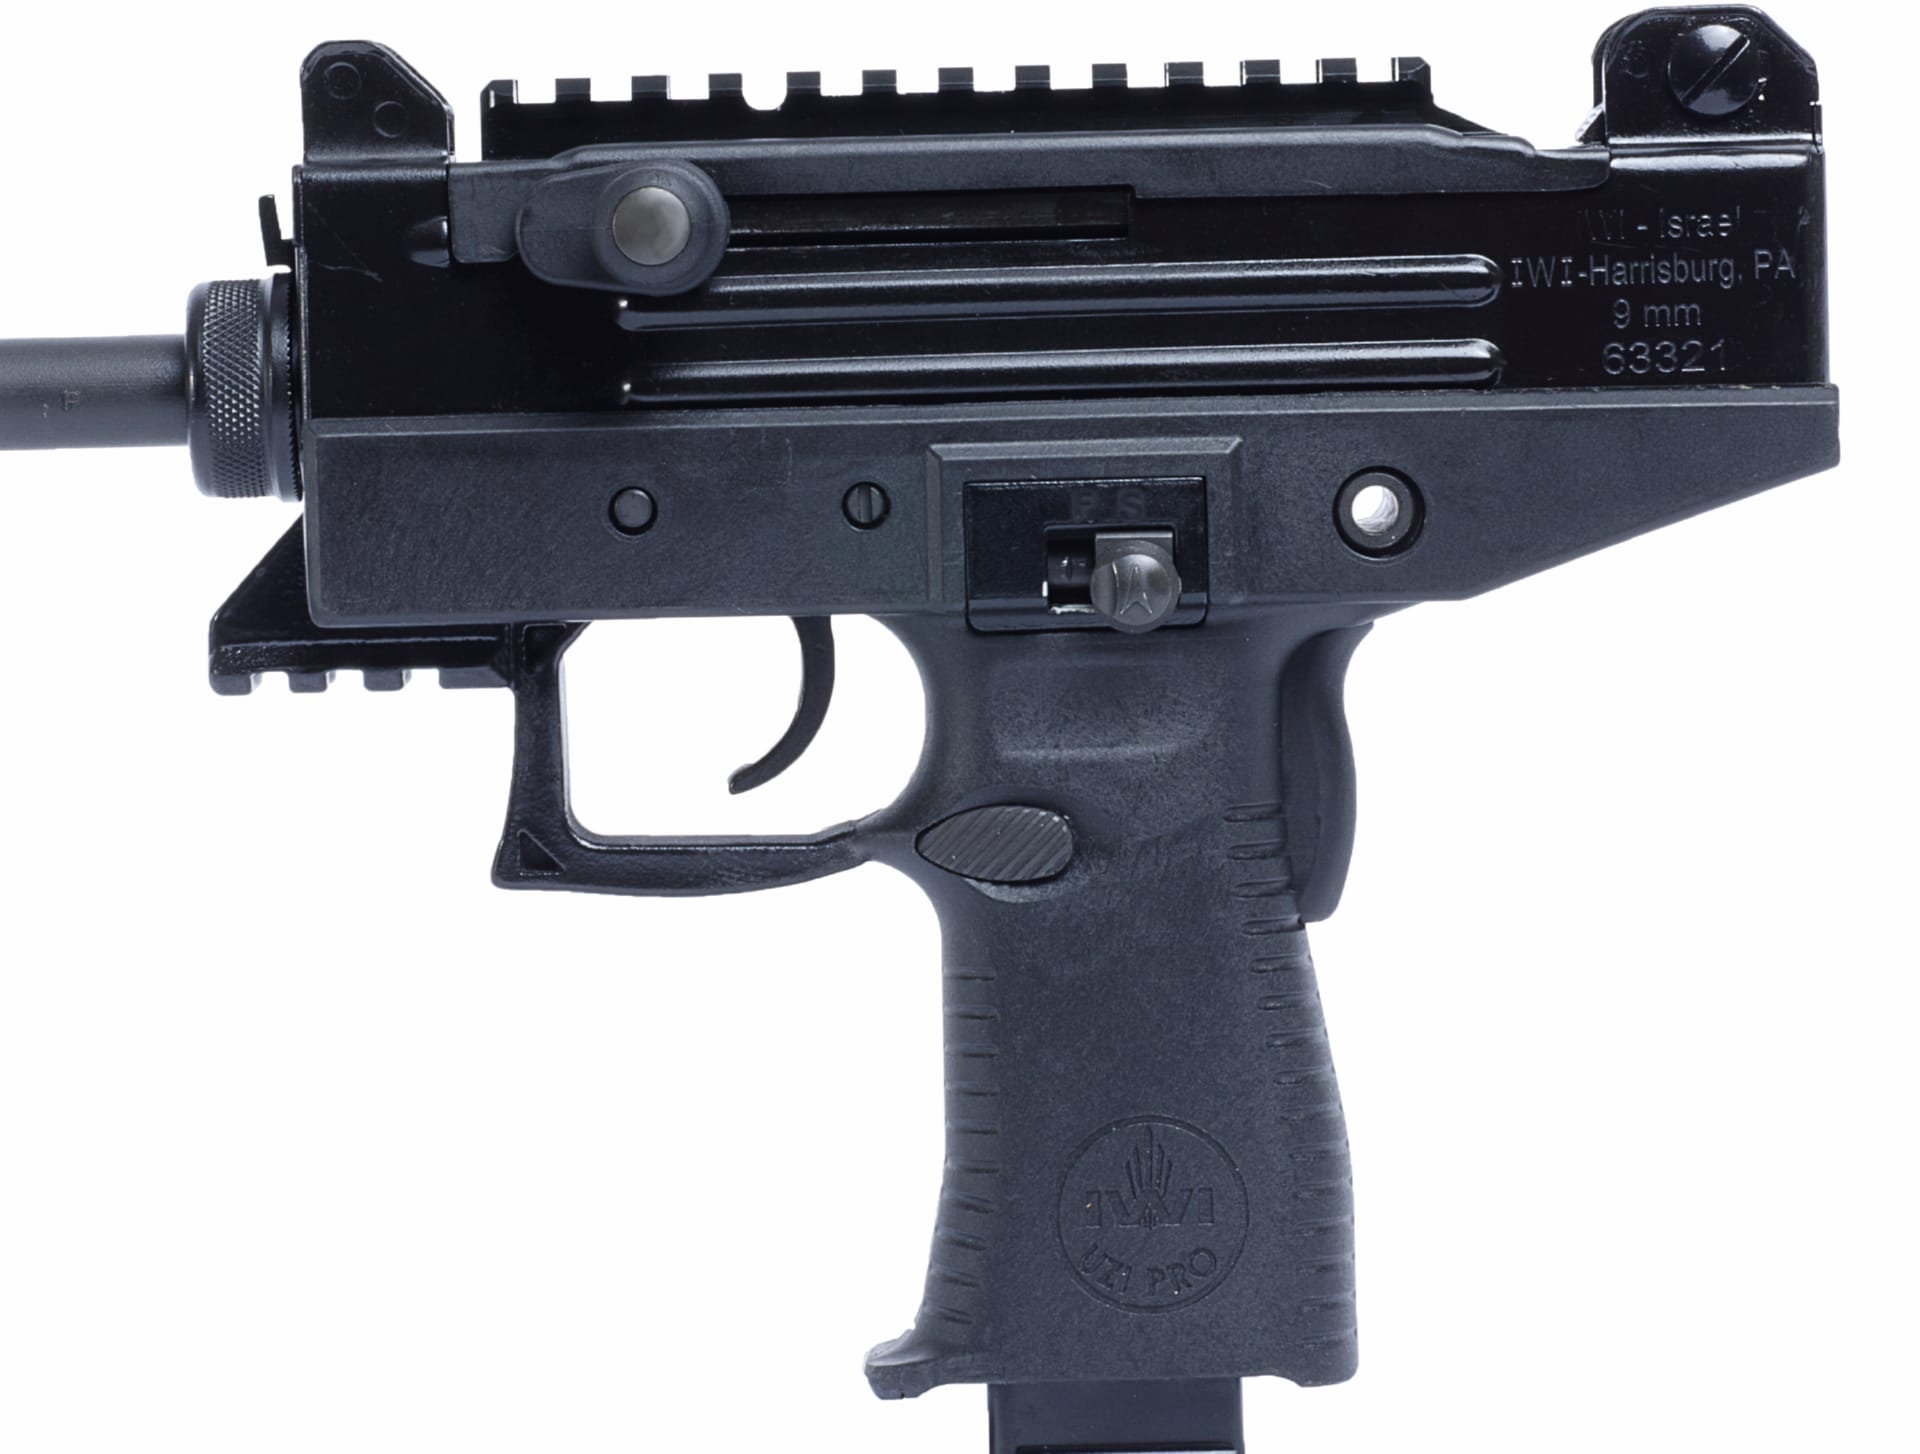 Uzi Pro Sub Machine Gun Pistol wallpapers HD quality